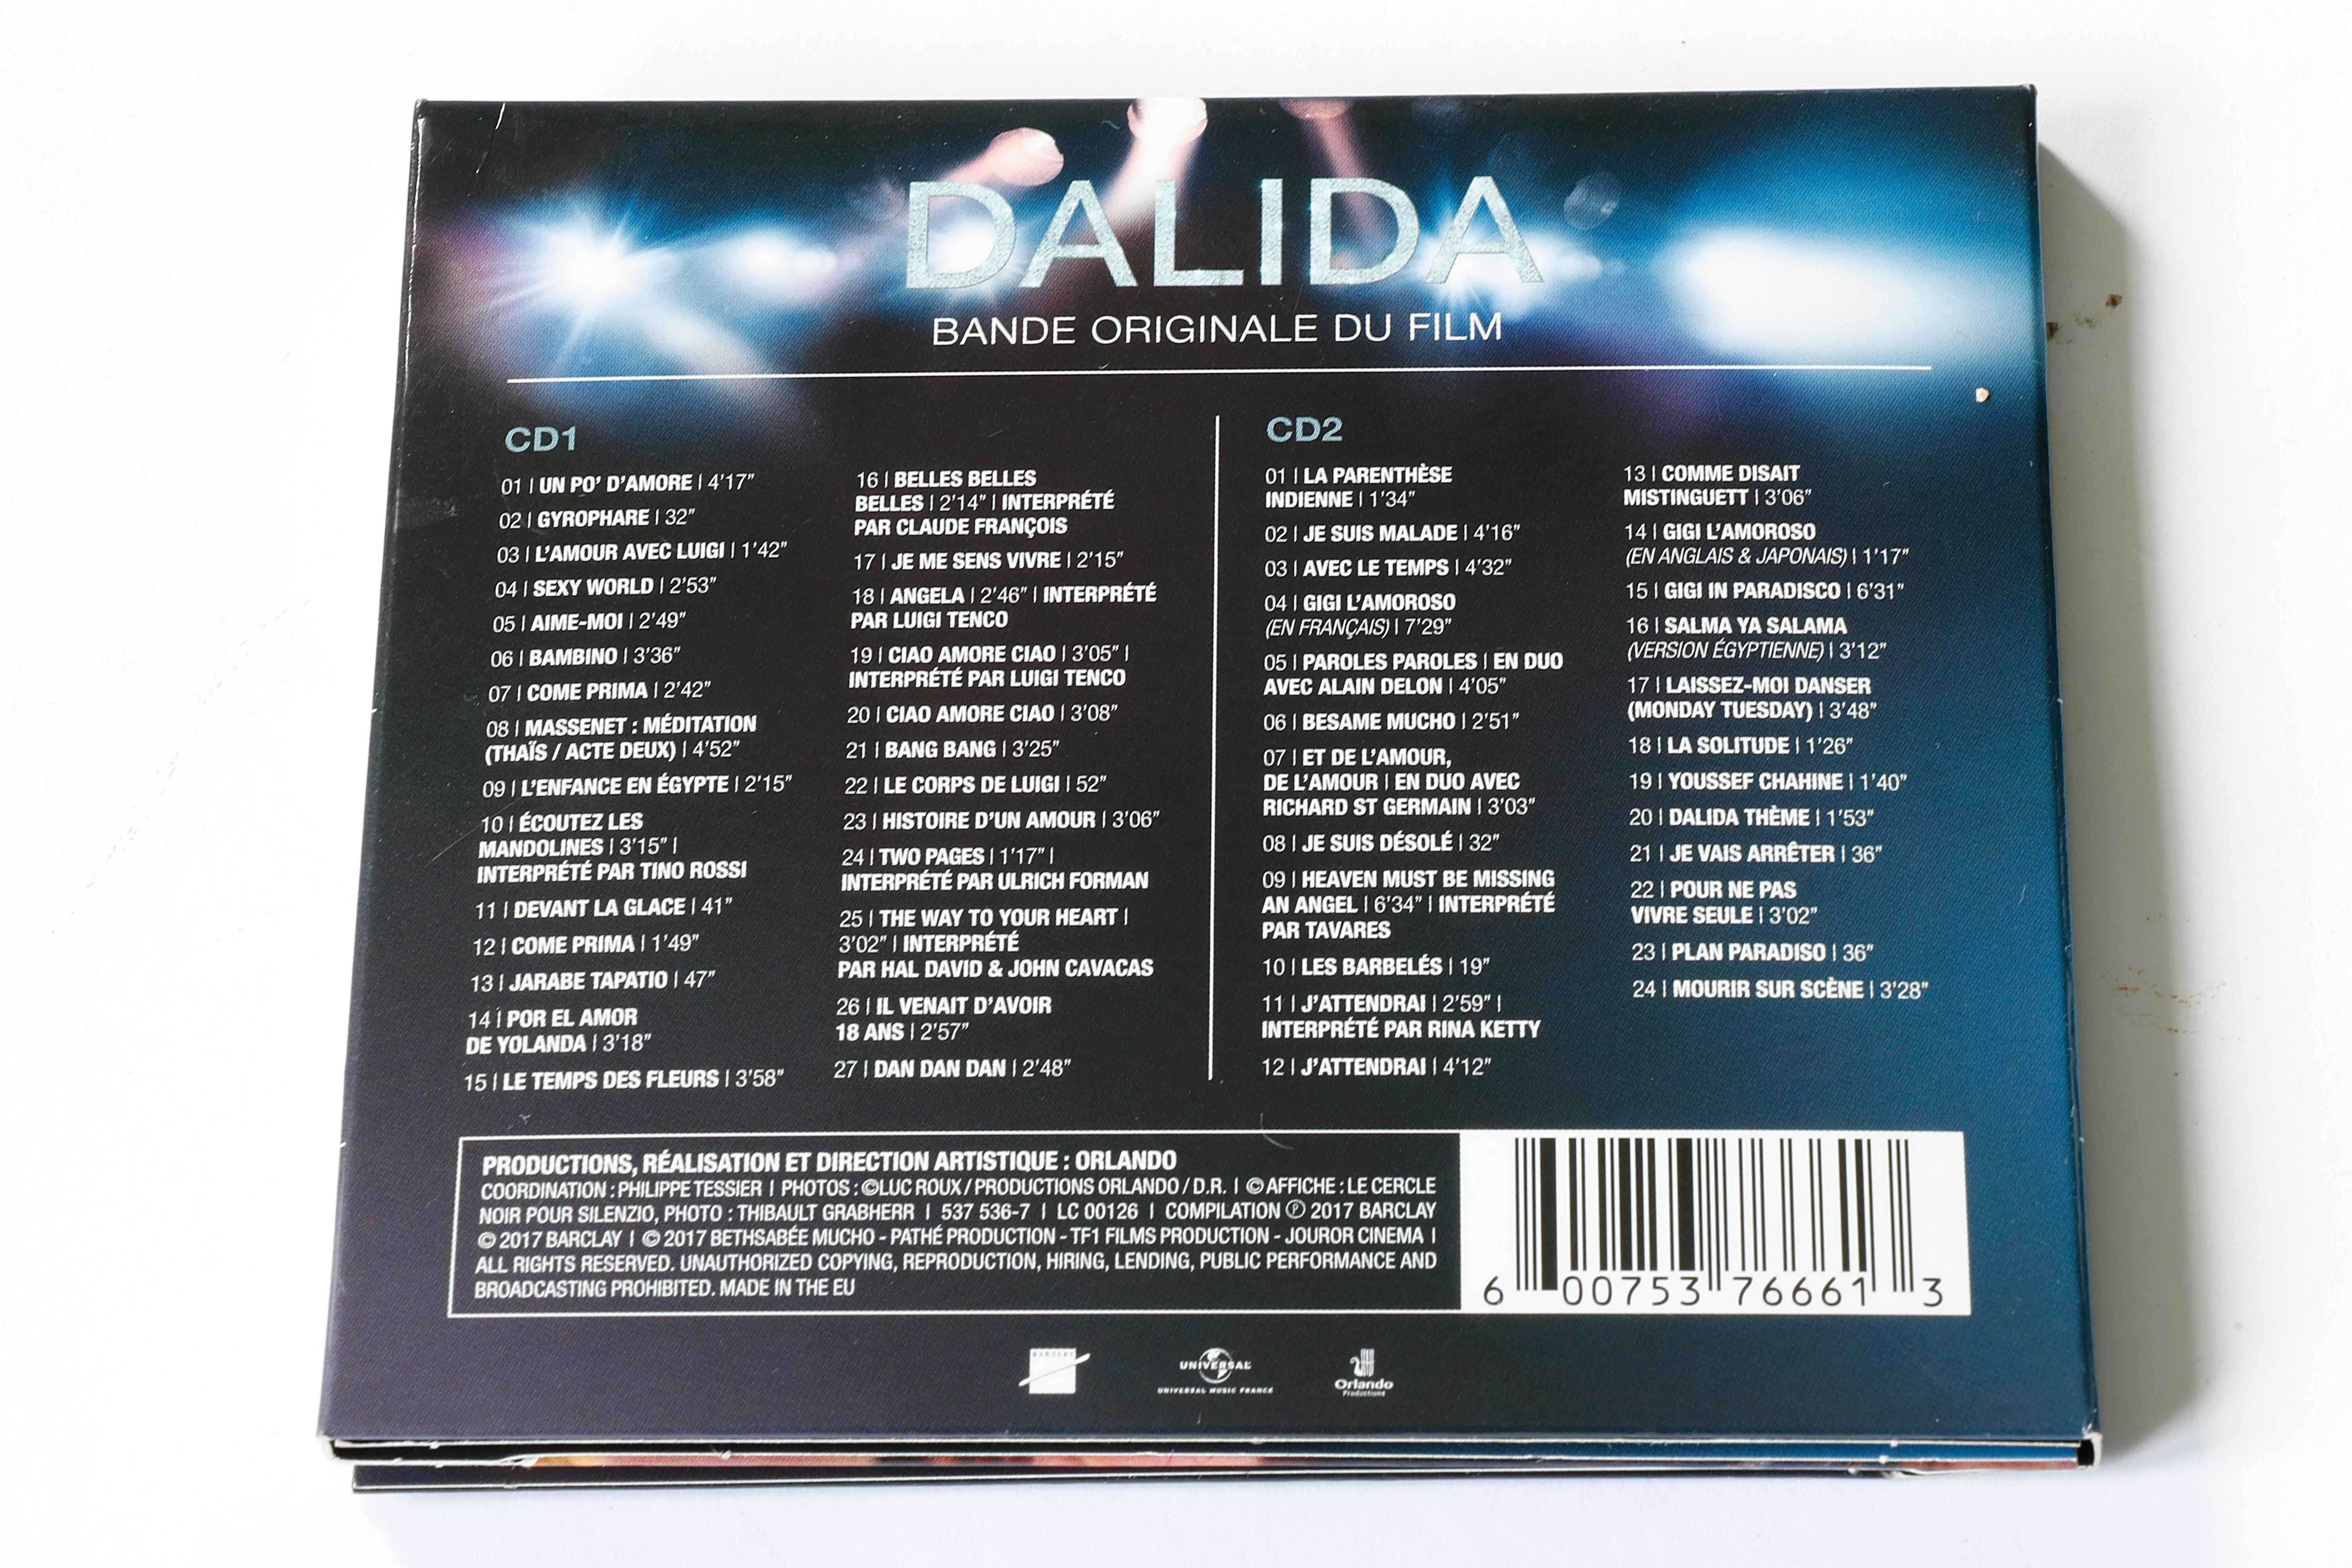 Dalida - Un Film de Lisa Azuelos - 2CD